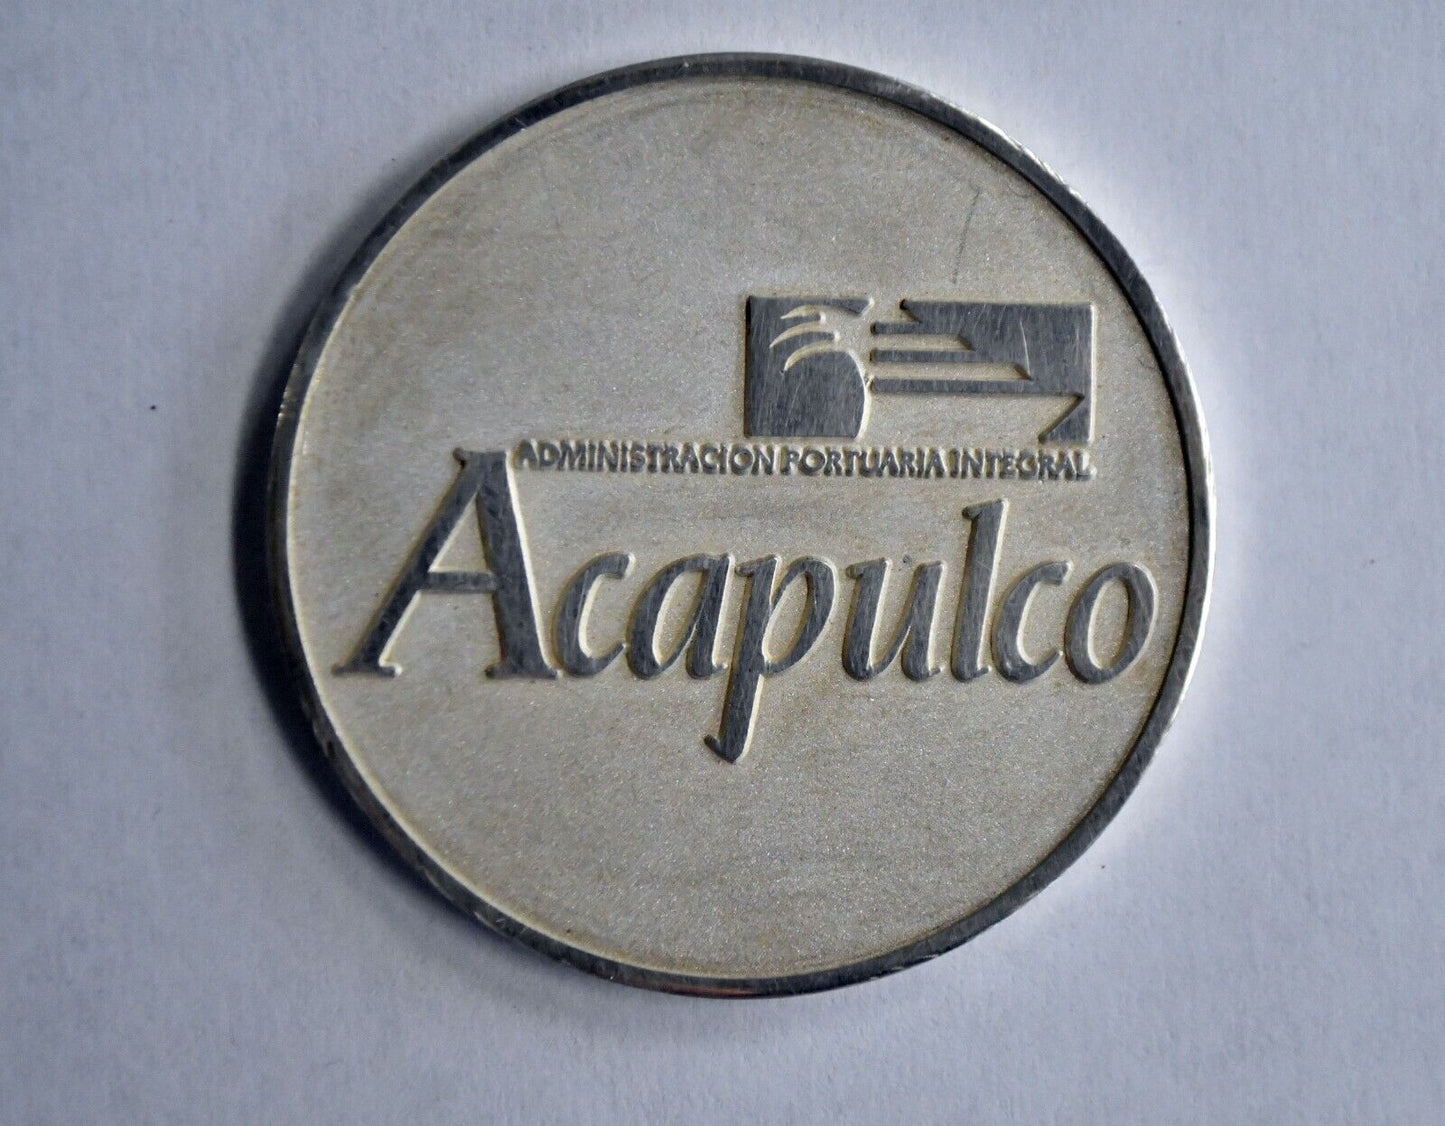 Acapulco Transportacion.999 Fine Silver 1.5 oz. Maritima Mexicana Nautical Co.